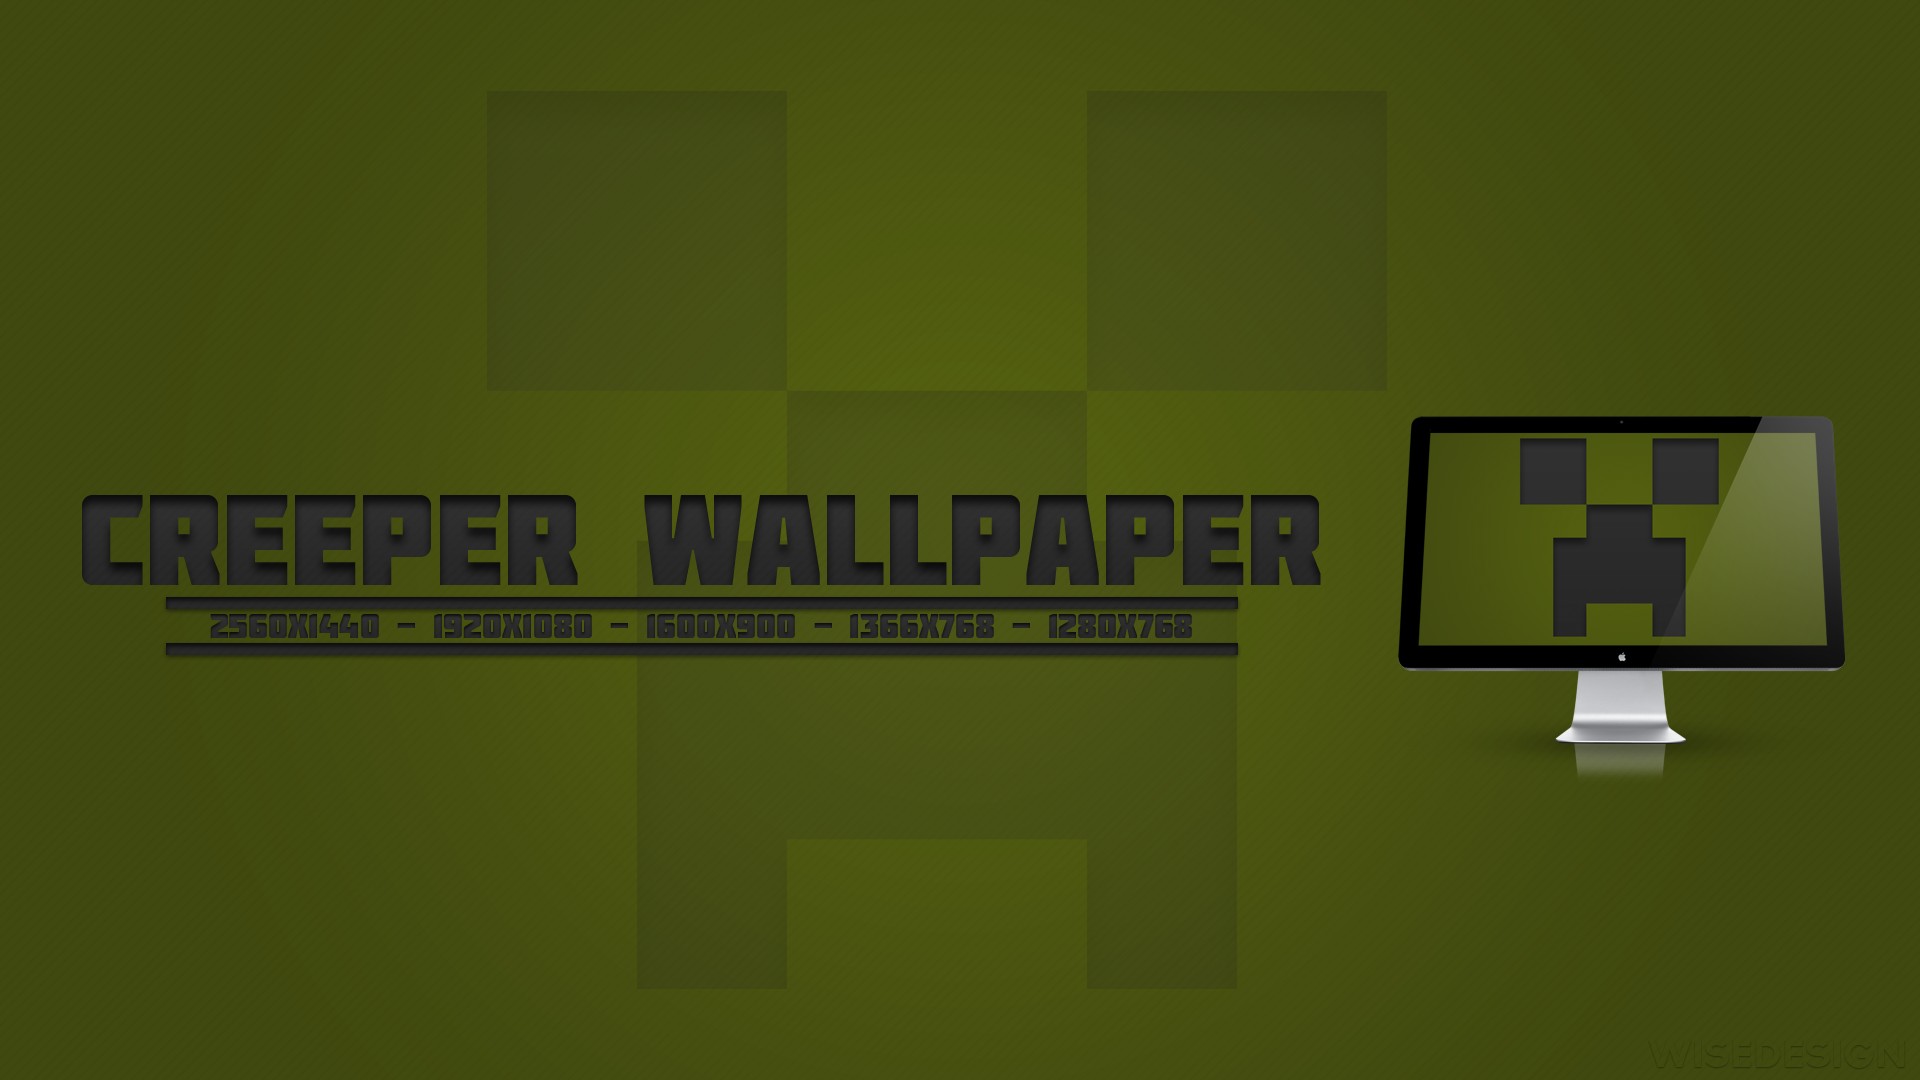 Creeper Wallpaper For Puter HD Minecraft